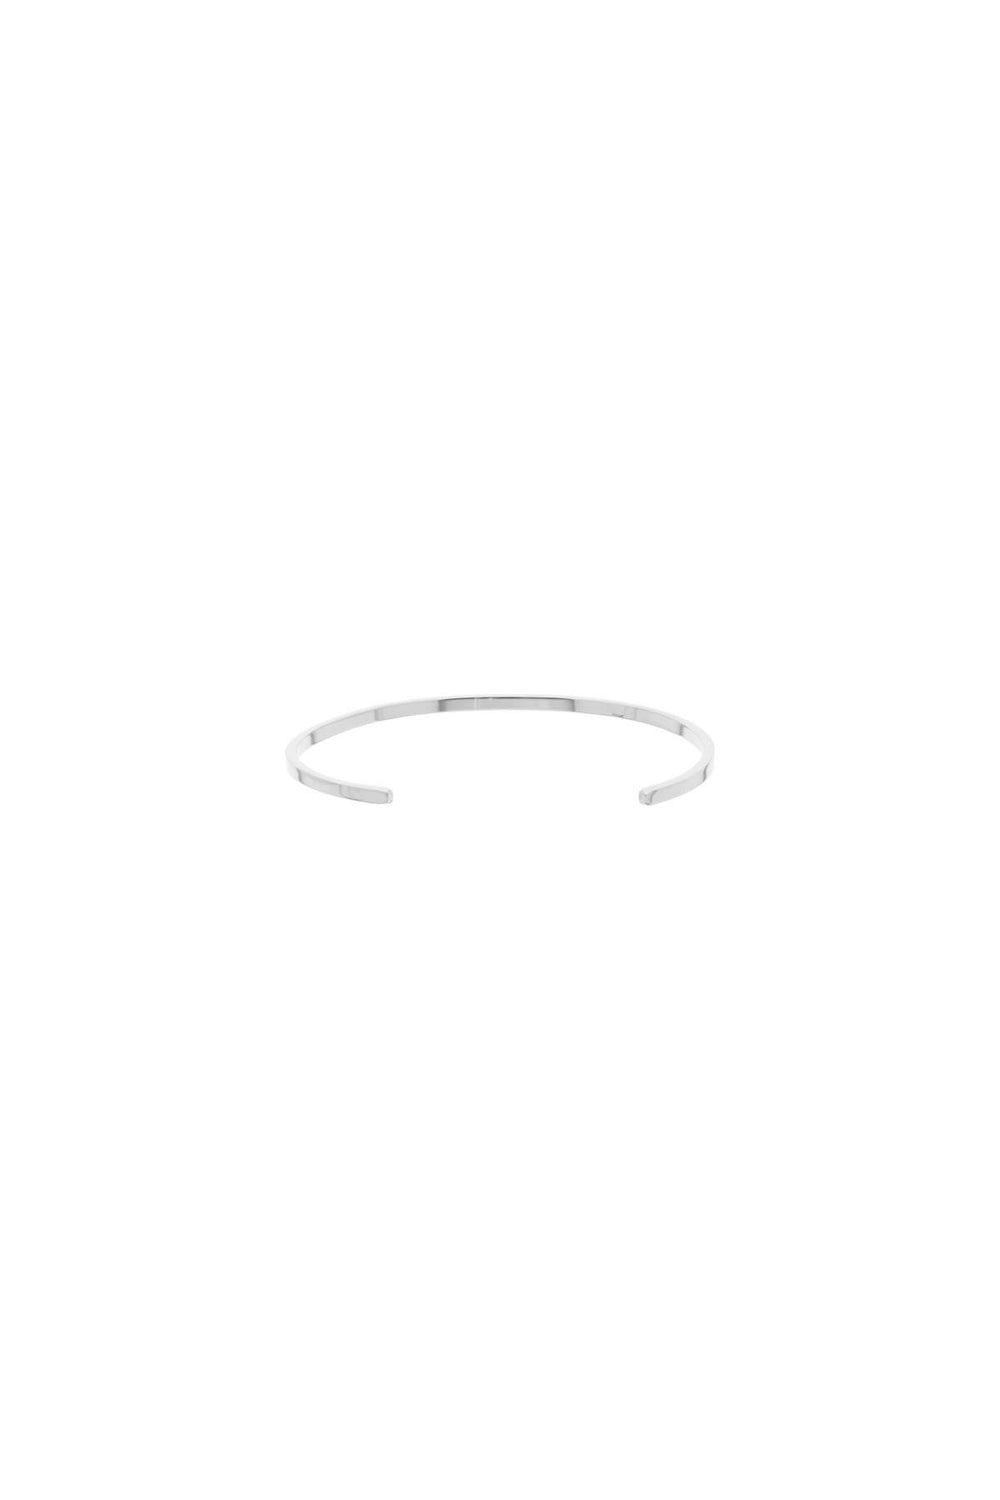 Maison margiela silver cuff bracelet-1